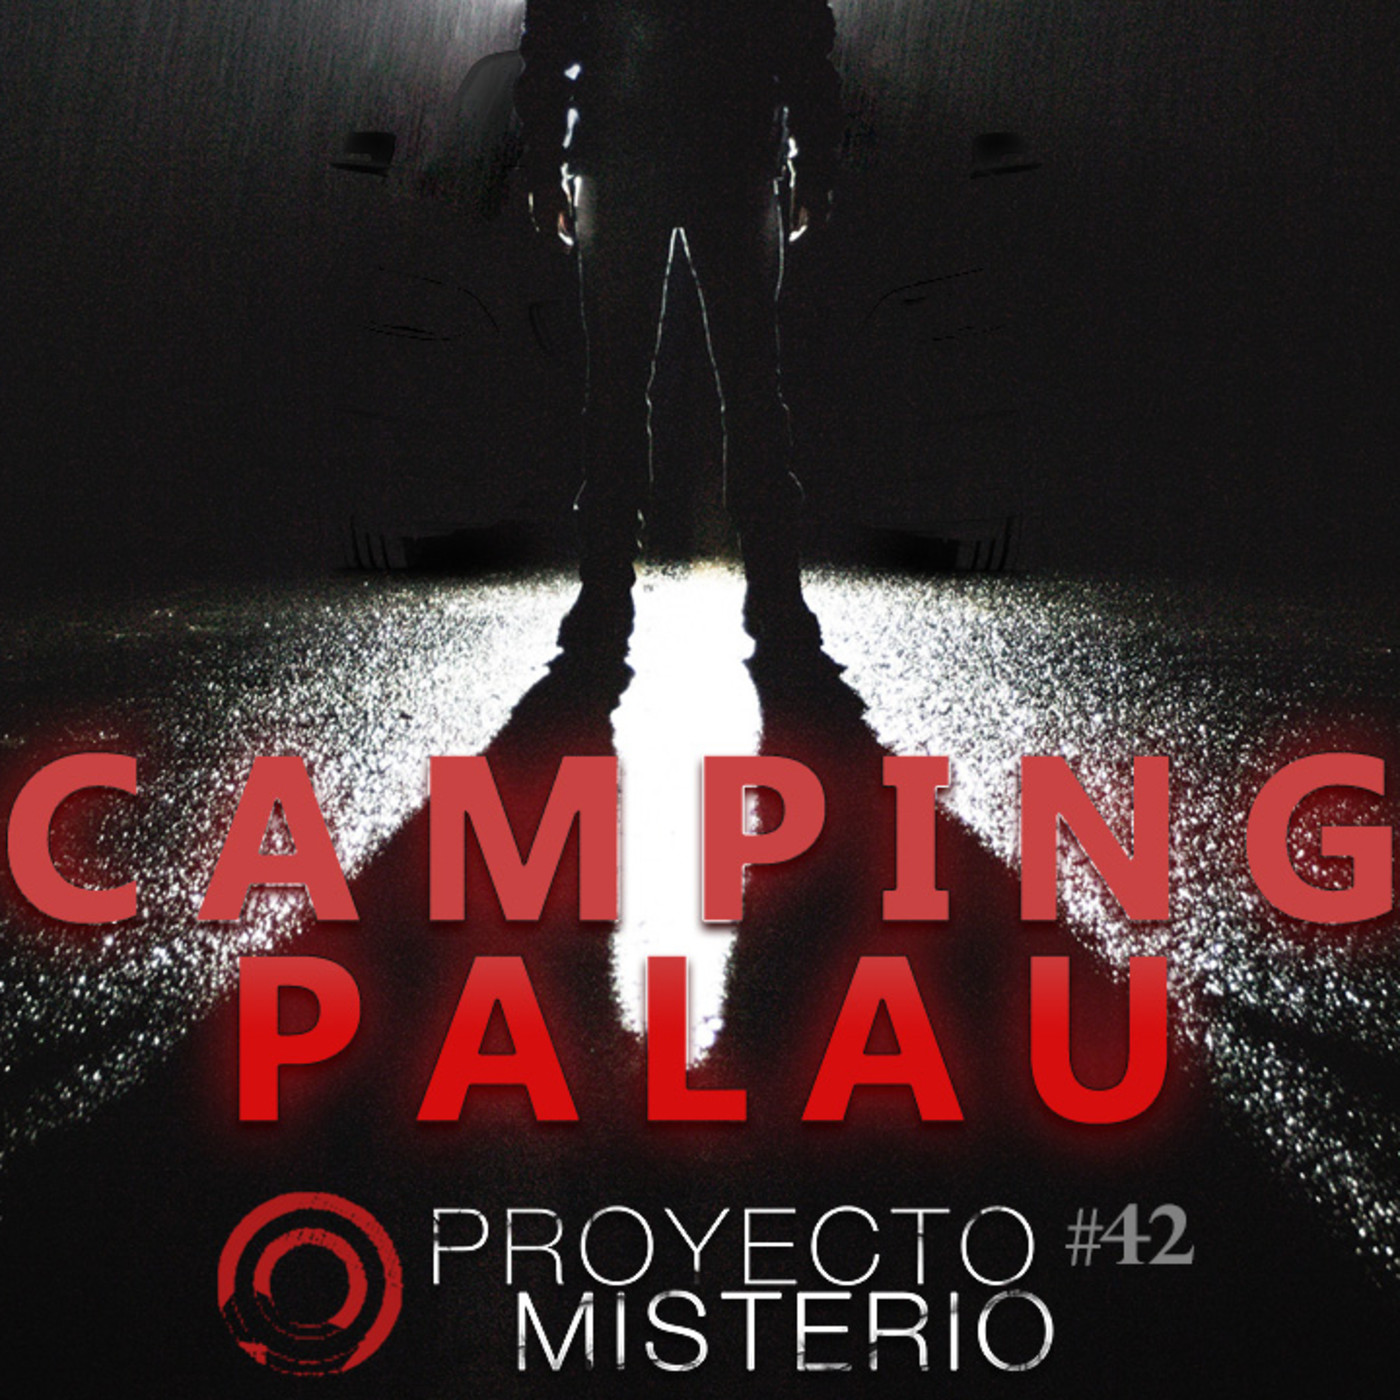 Proyecto Misterio 42: Camping Palau